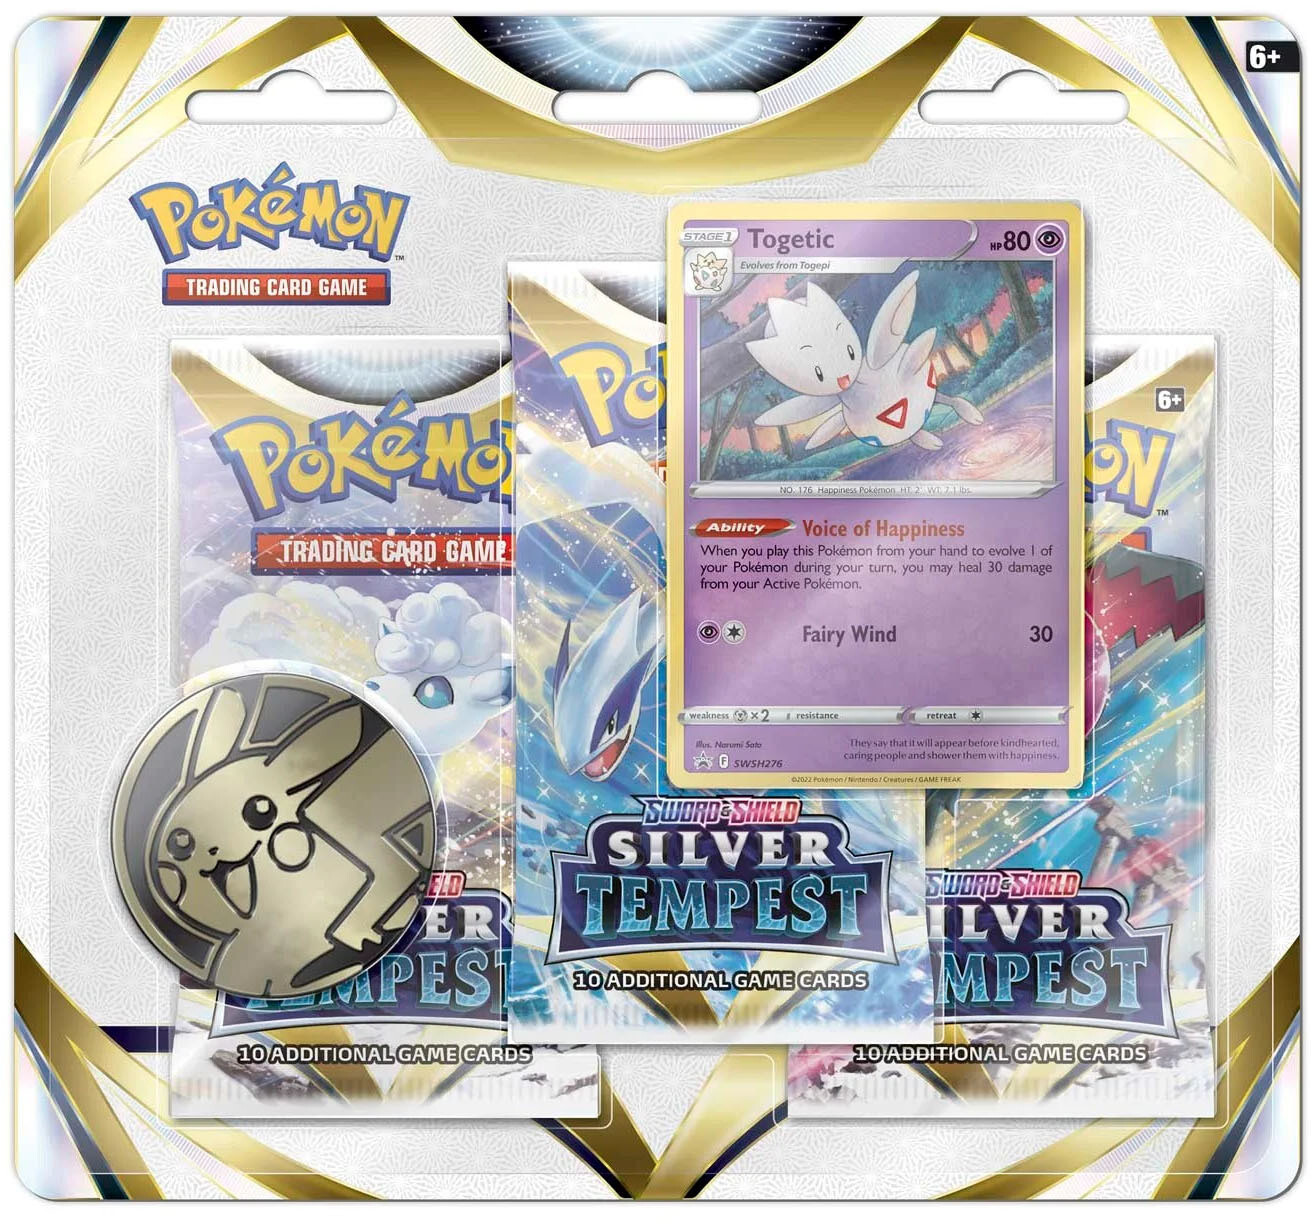 Pokémon - Silver Tempest - Blister Pack - Togetic - EN